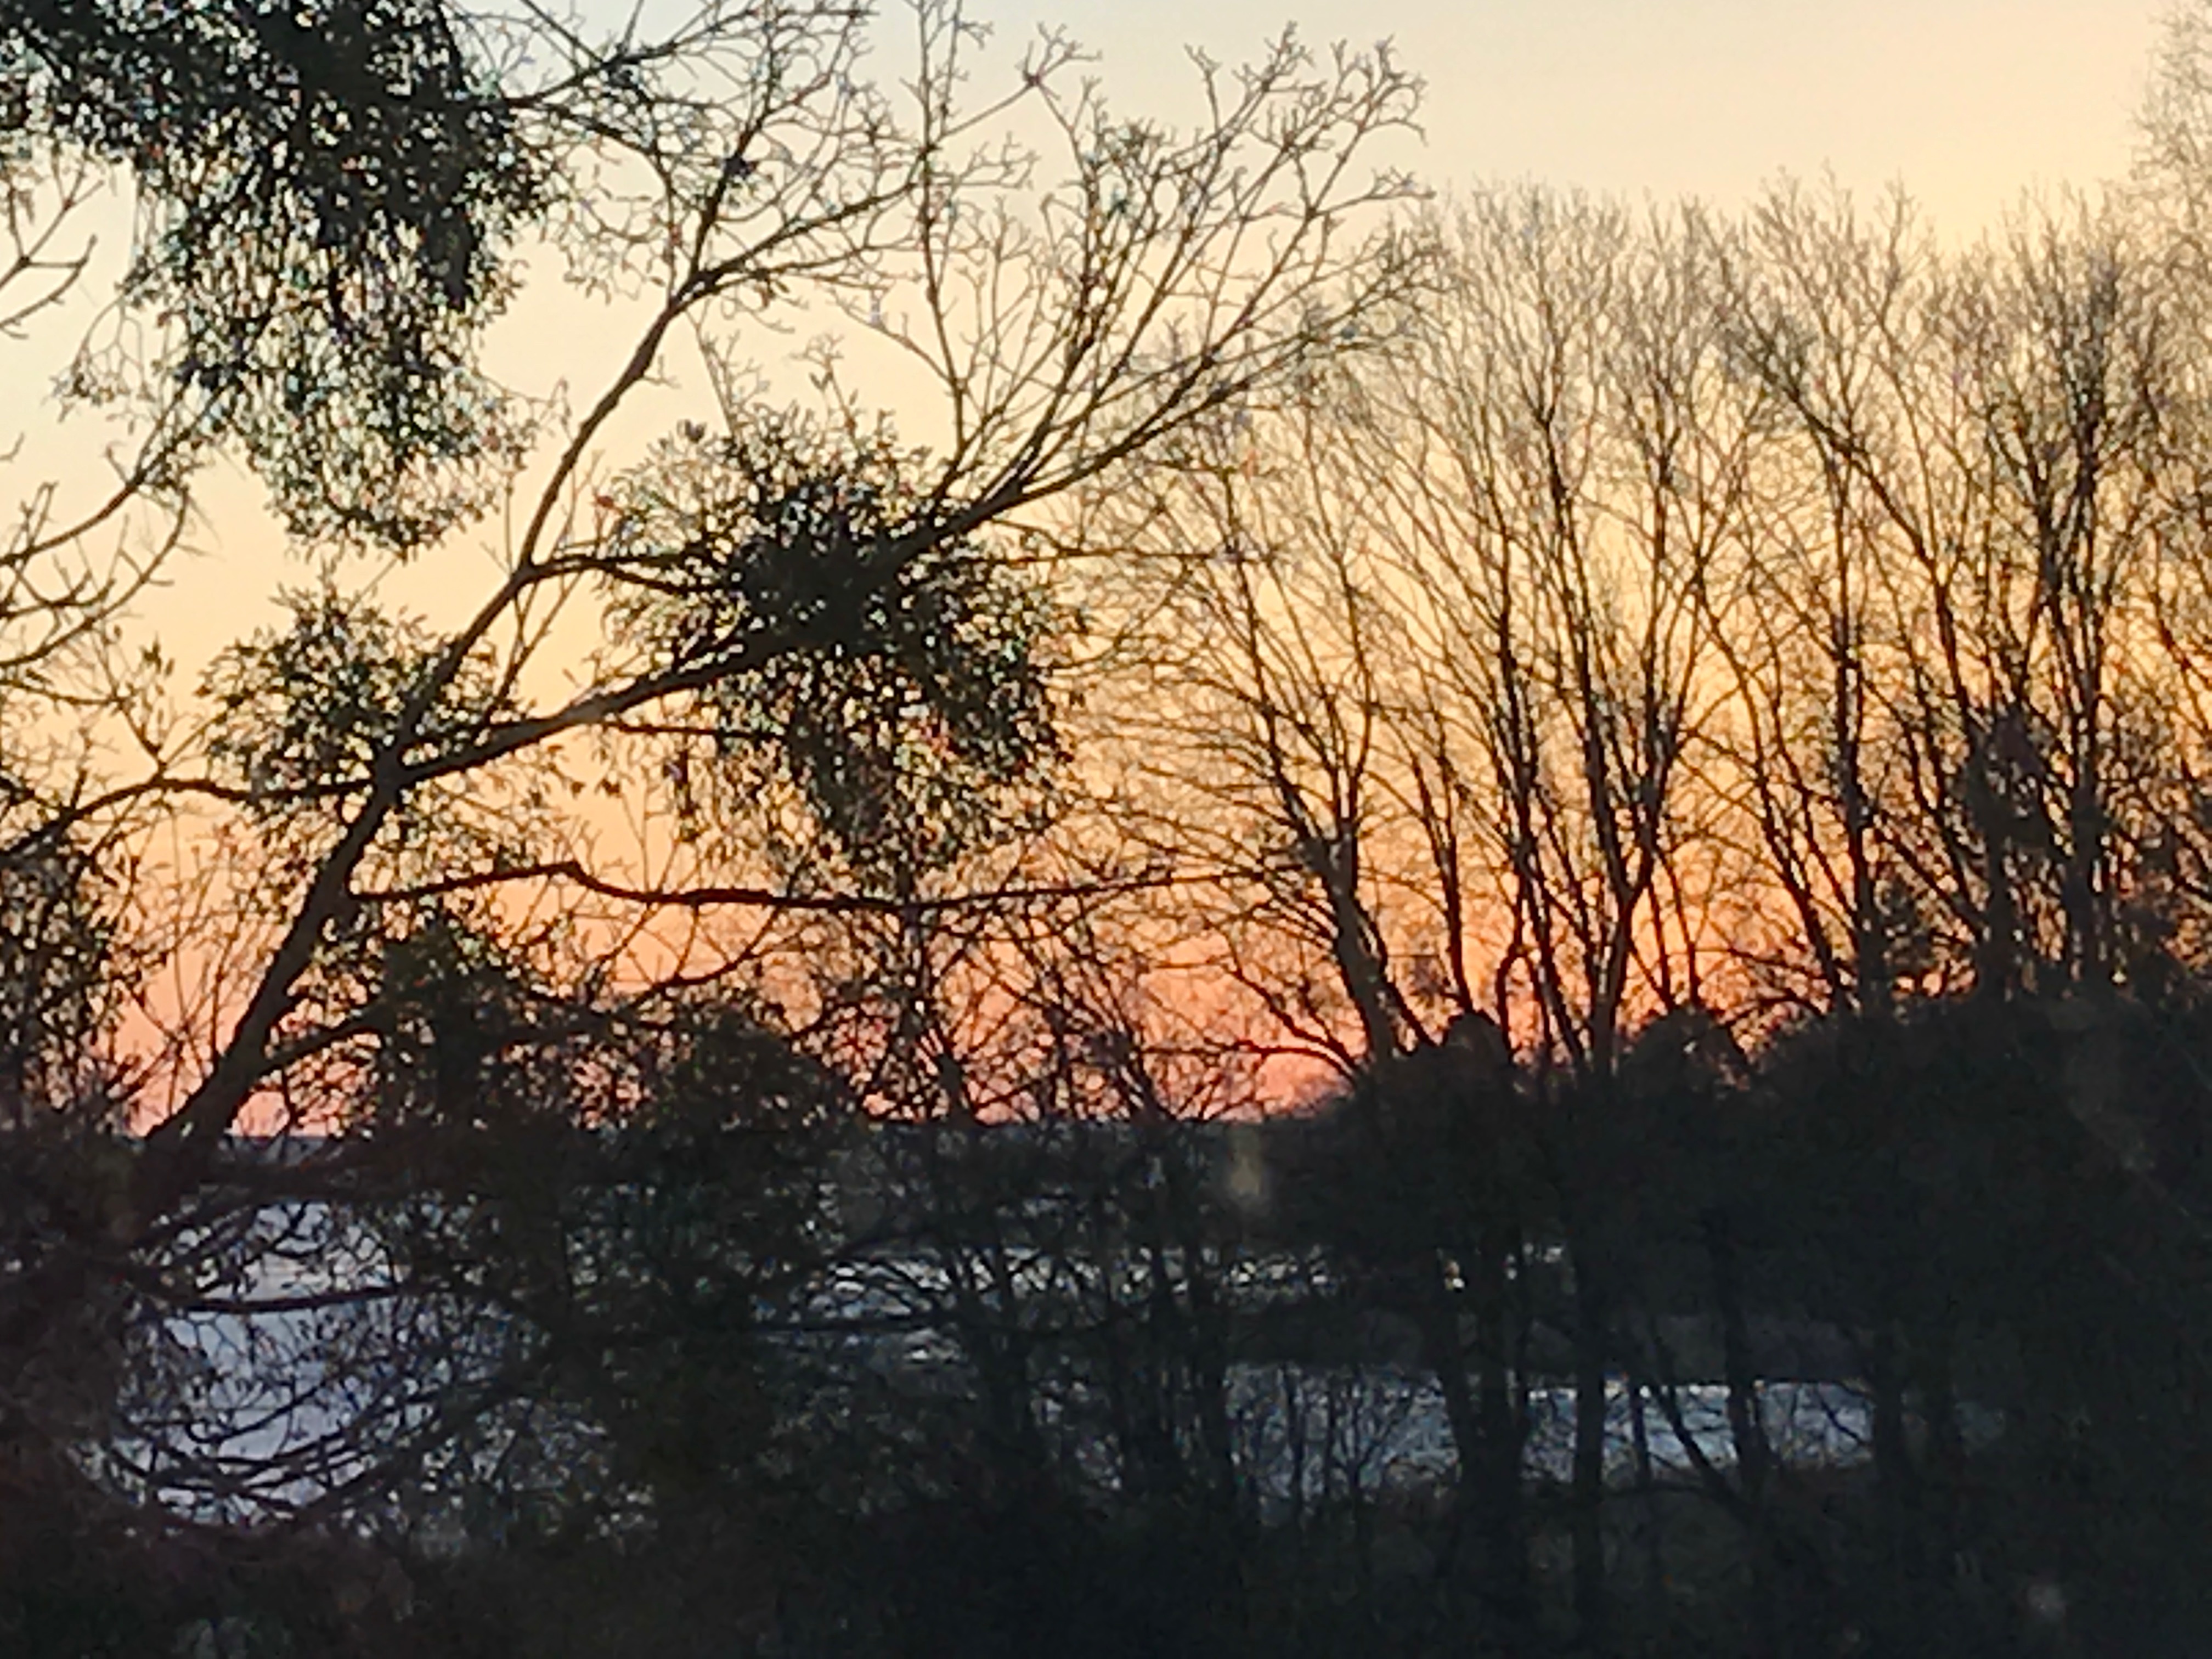 Grenar med mistlar i siluett mot orangerosa morgonhimmel